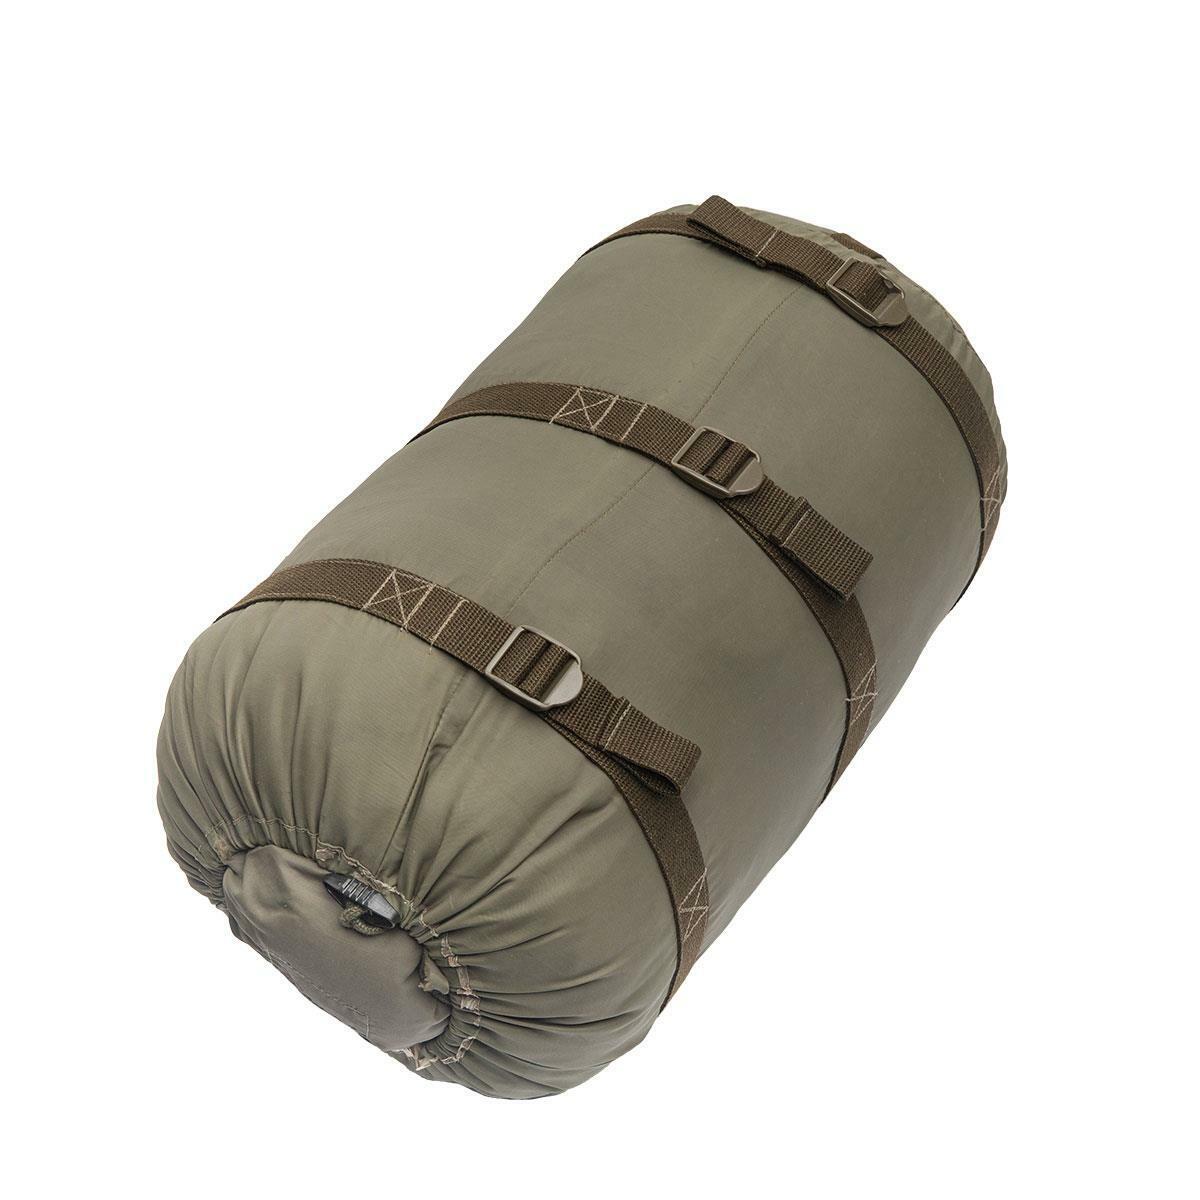 Genuine Austrian army Compression Sack Duffel bag sleeping bag transport Olive